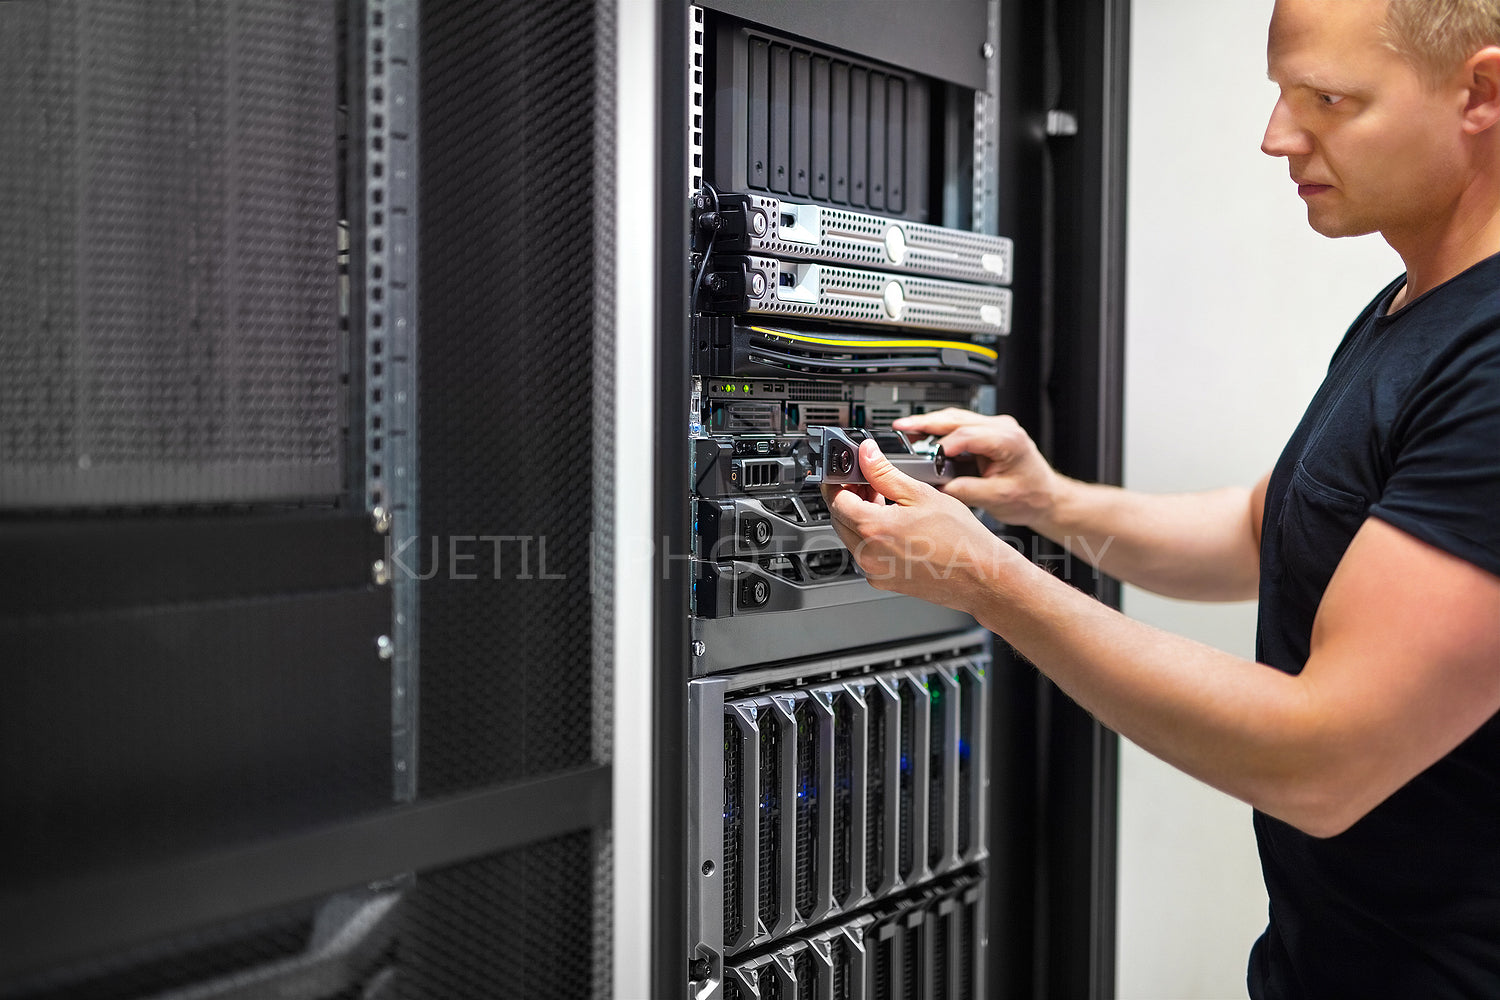 IT Consultant Monitors Servers In Data Center